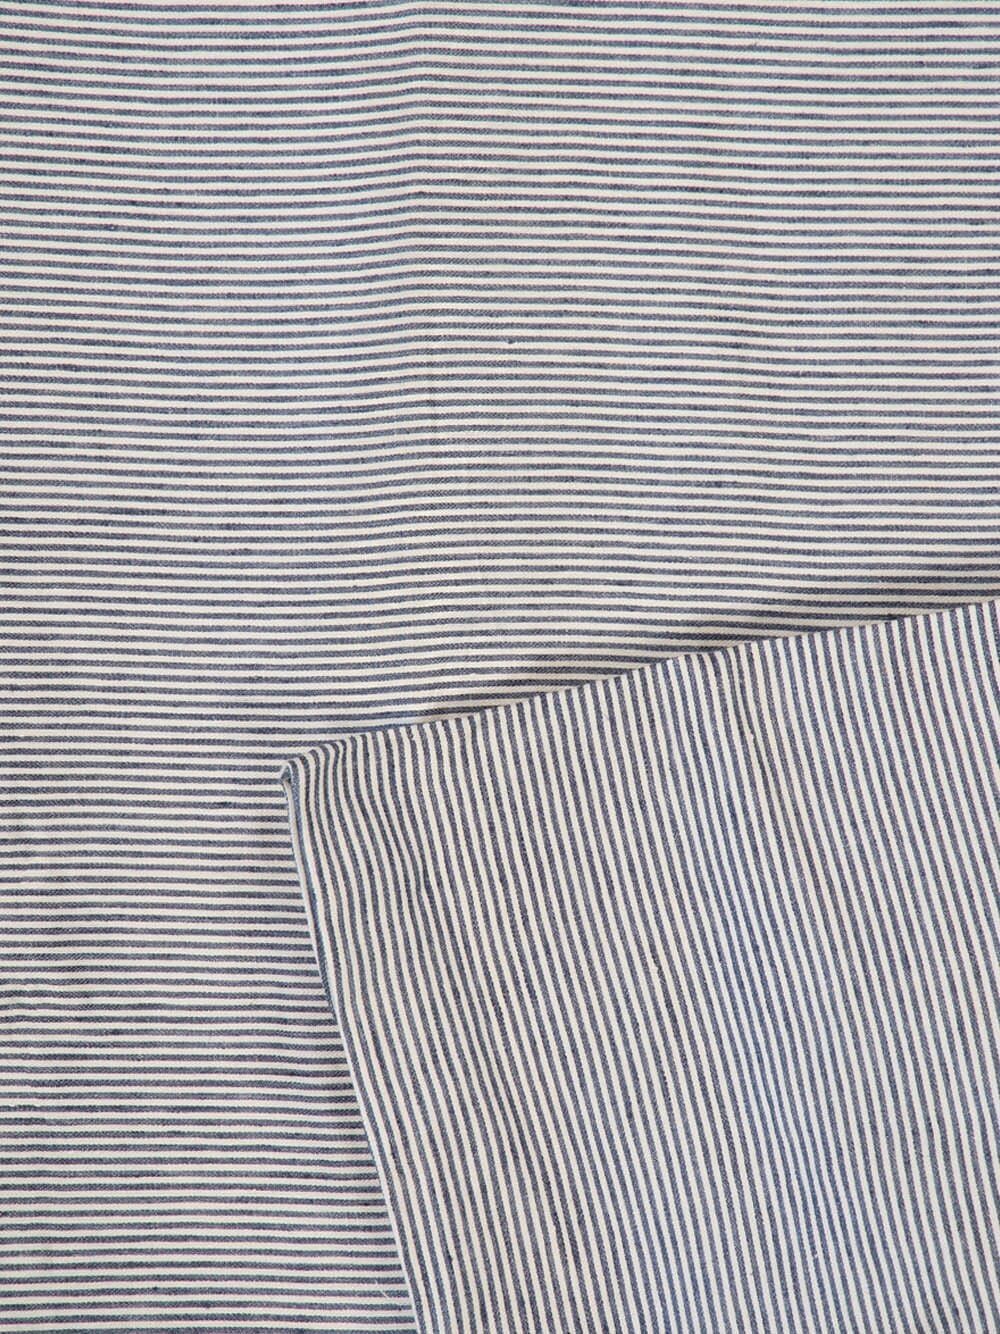 LibecoWorkshop Stripe Duvet Cover at Fashion Clinic